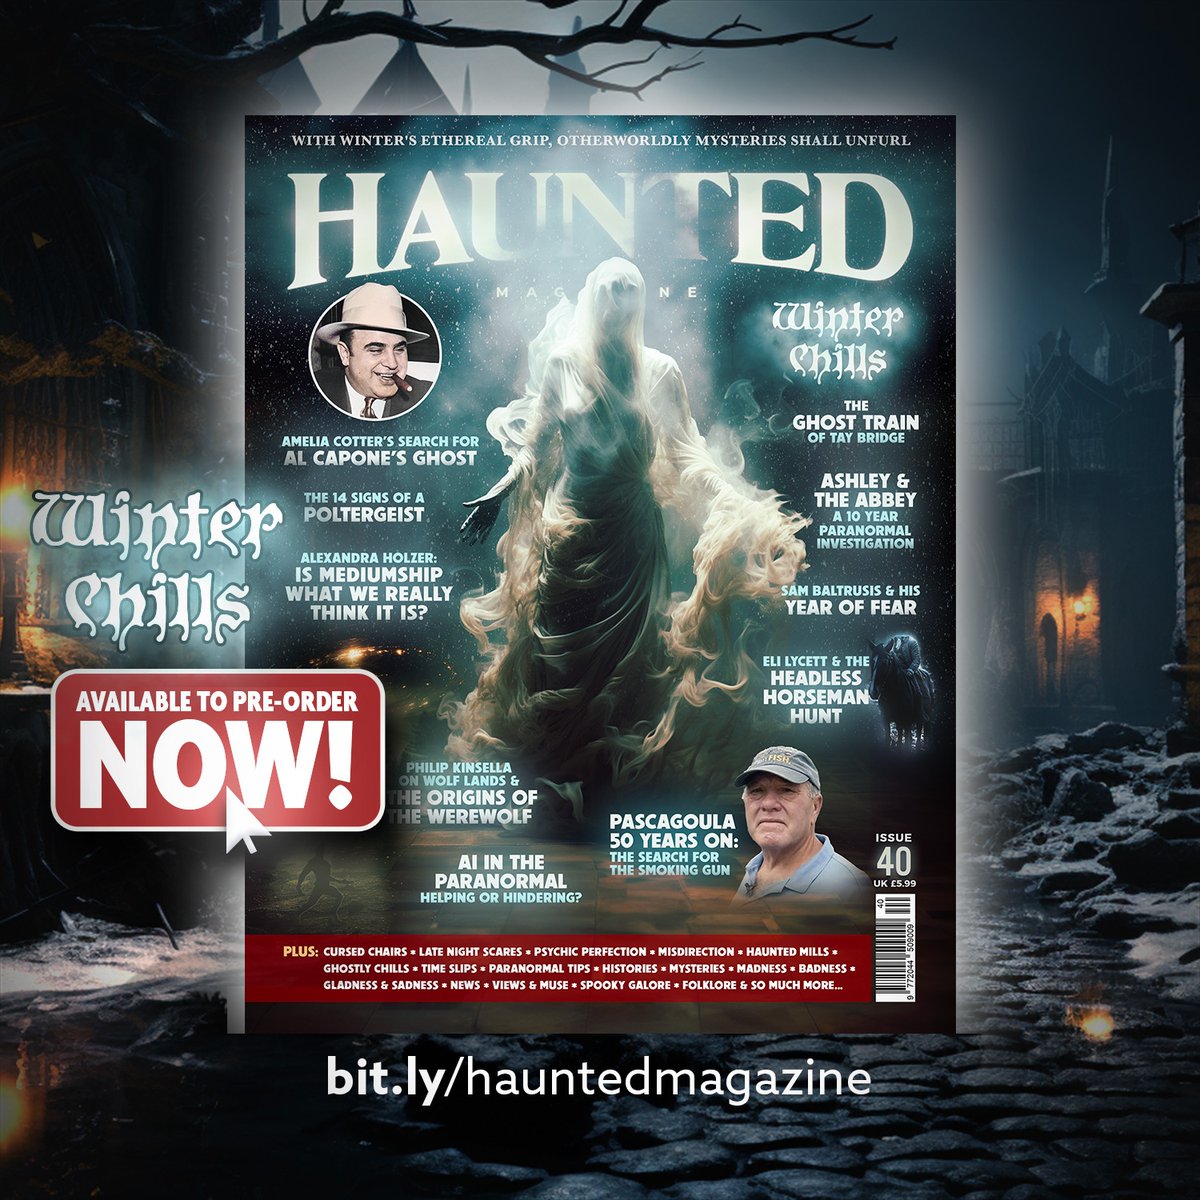 hauntedmagazine tweet picture